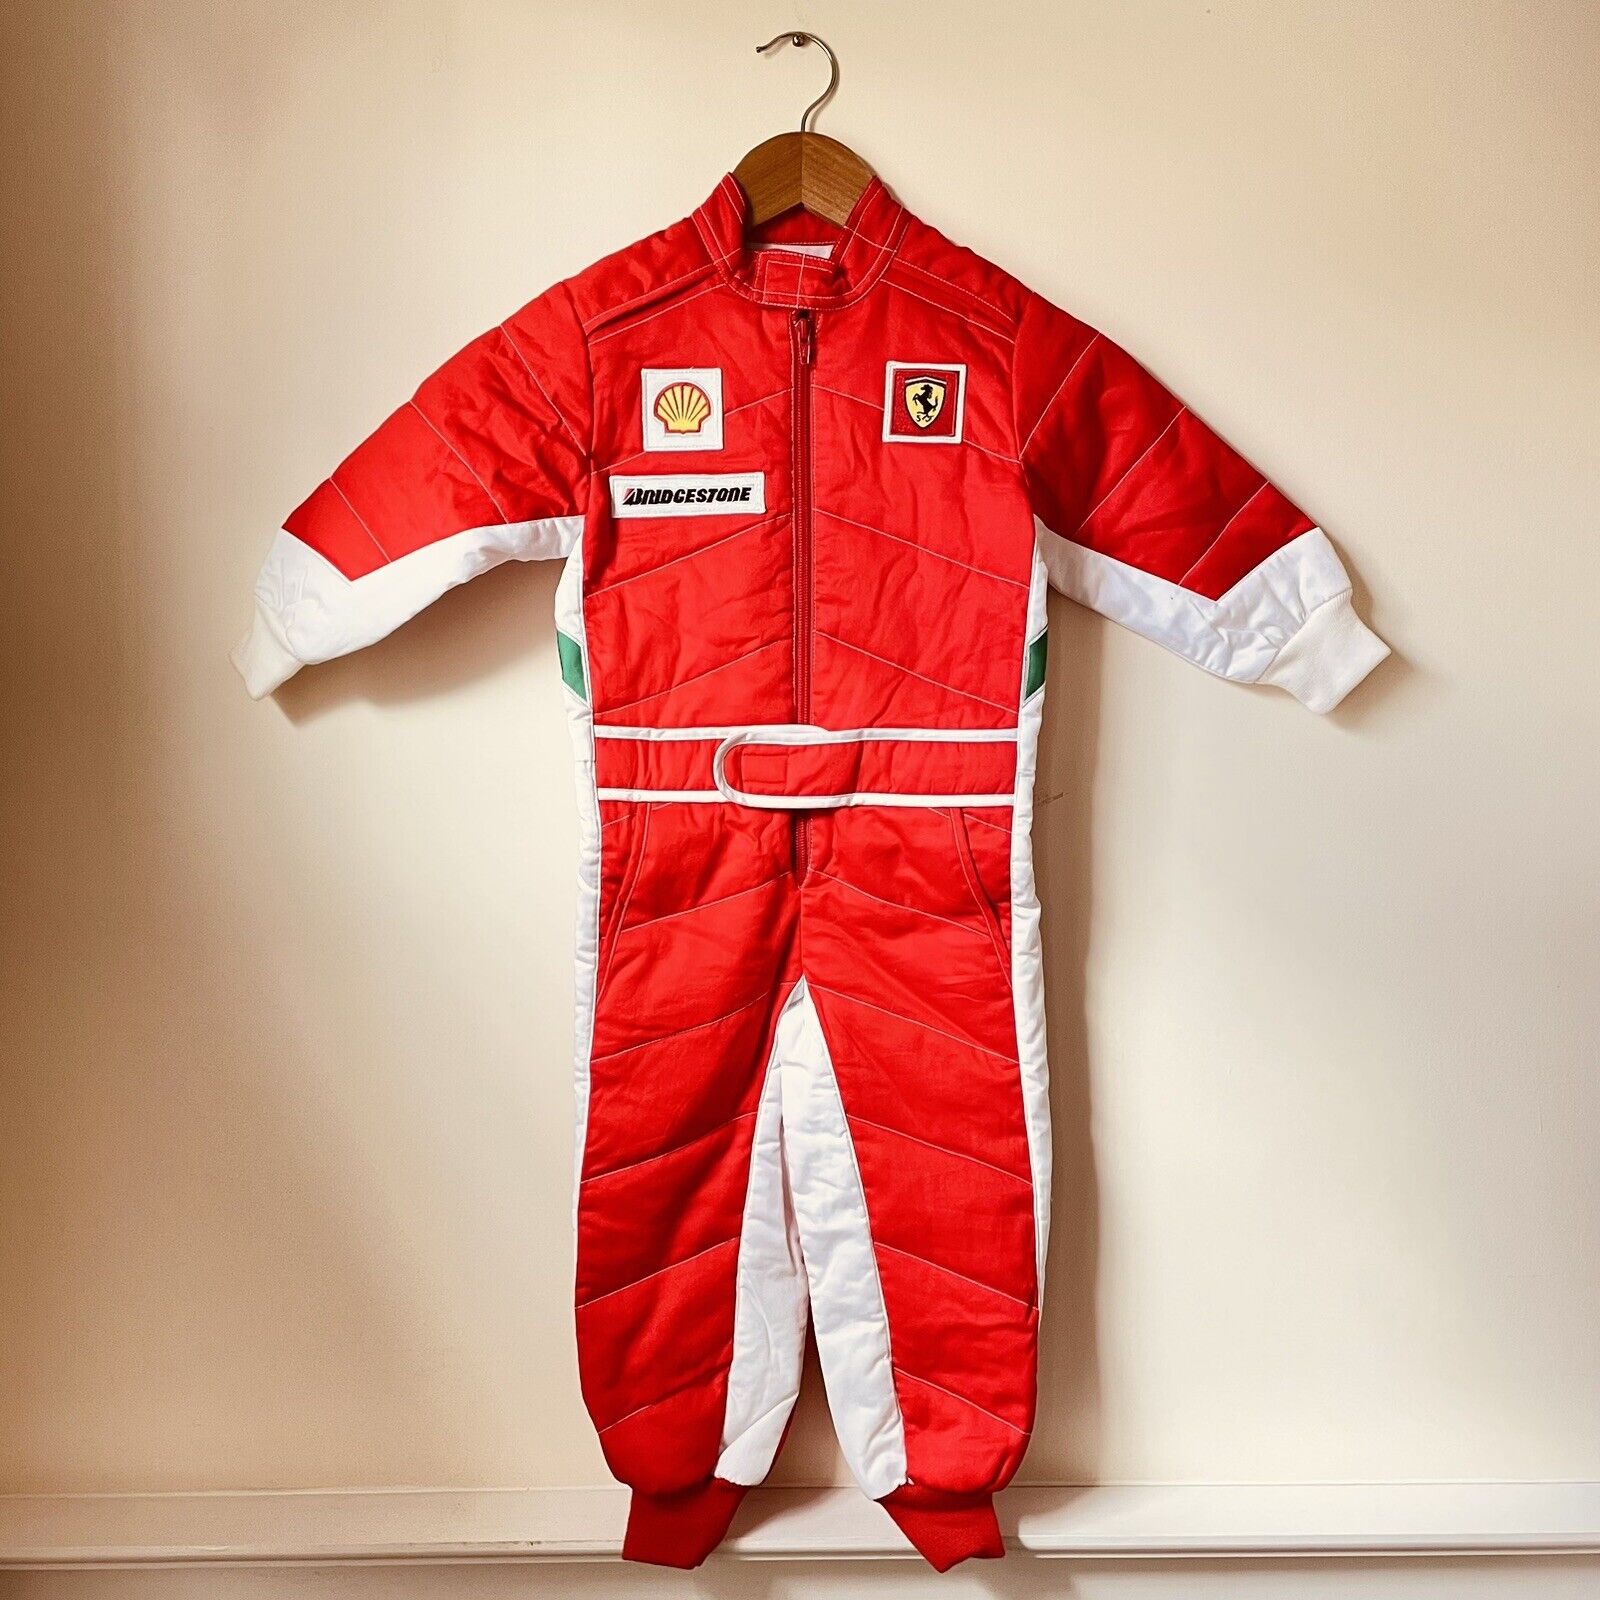 Scuderia FERRARI OFFICIAL PRODUCT Formula 1 -Driver Racing Suit Child Size 1-2